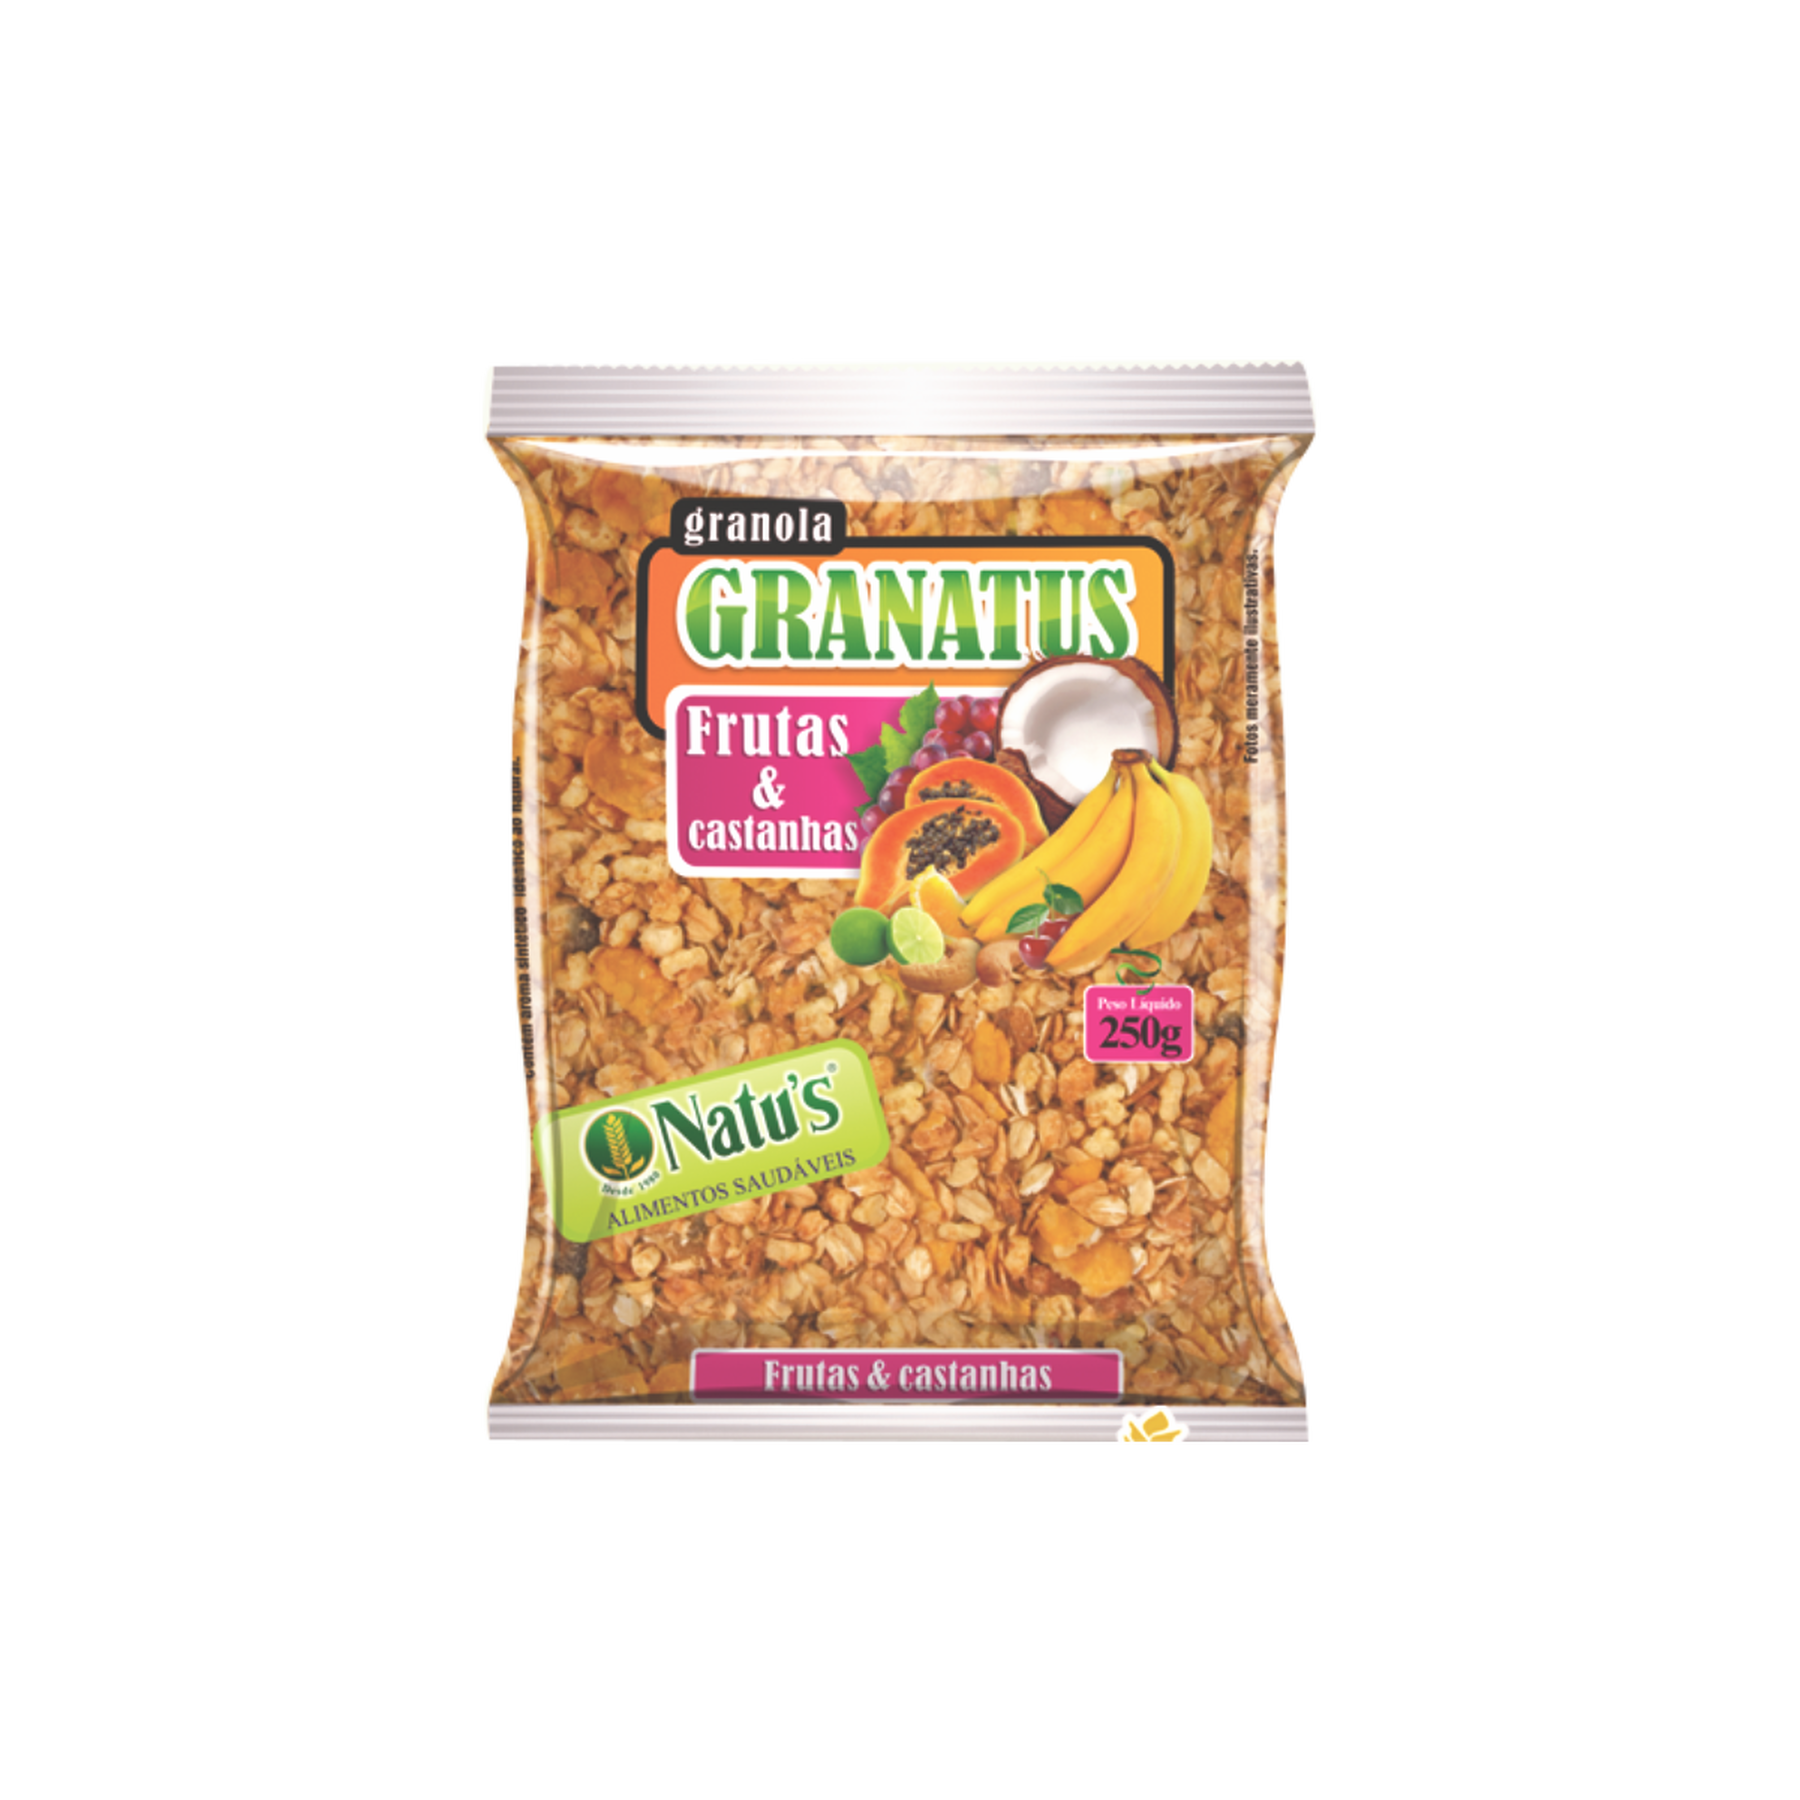 Granola Granatus Frutas 250g